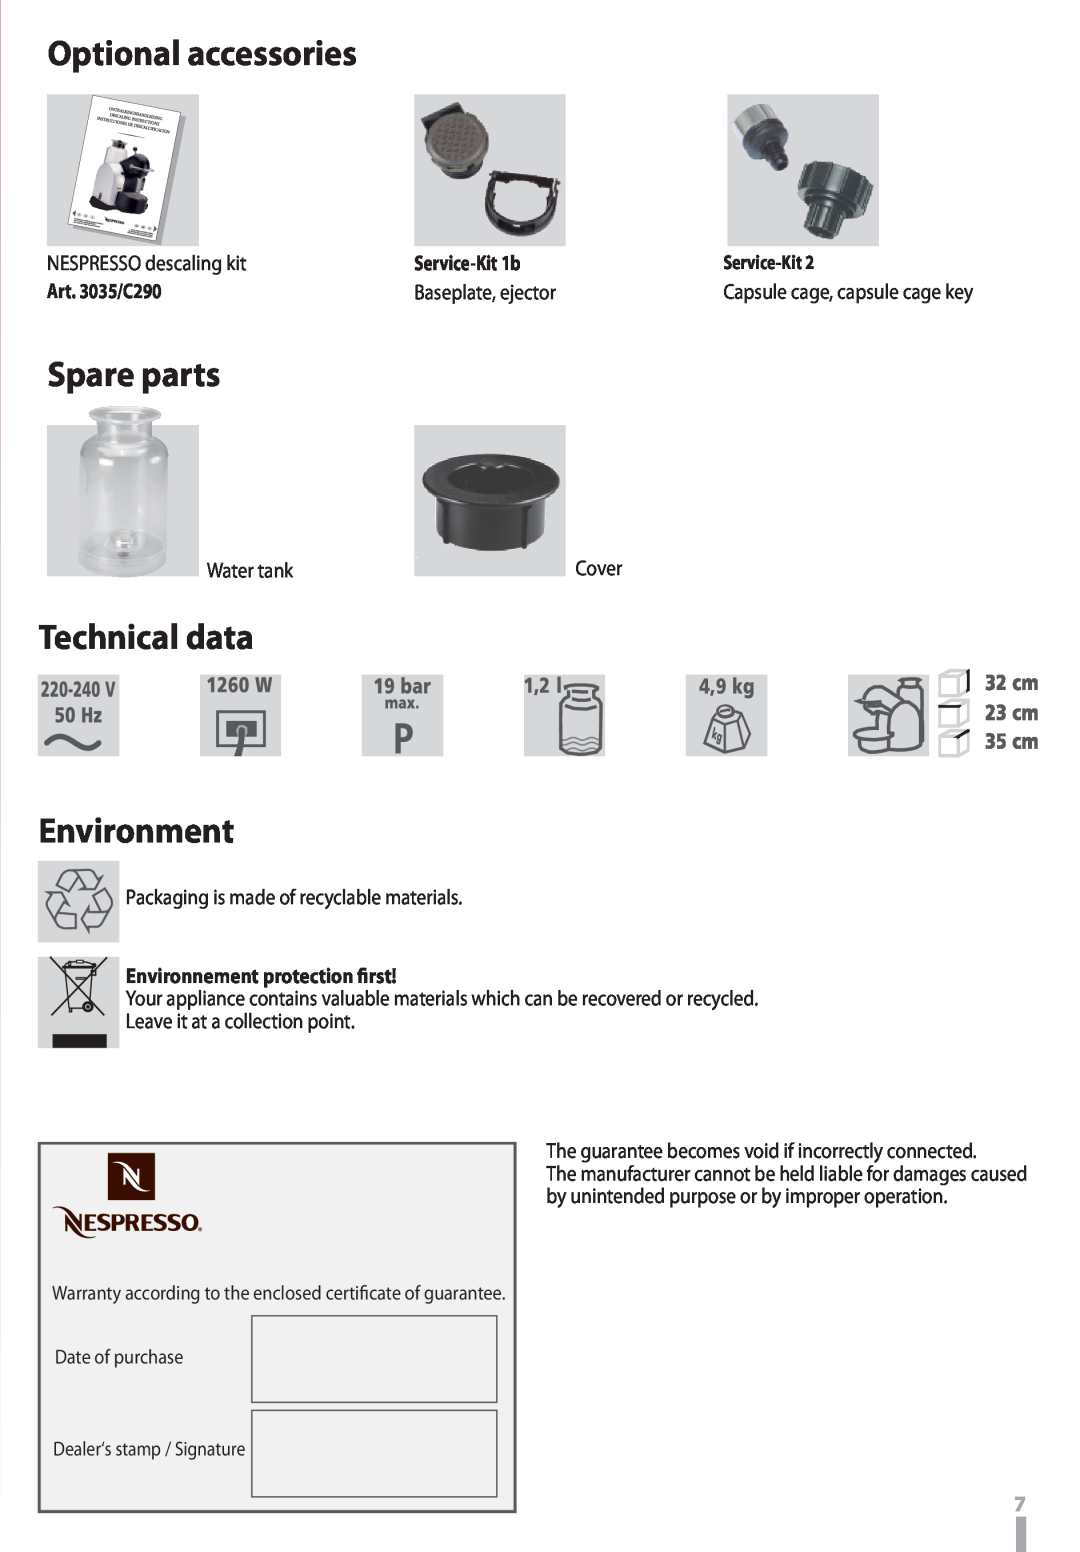 Nespresso D290 Optional accessories, Spare parts, Technical data Environment, NESPRESSO descaling kit, Service-Kit 1b 